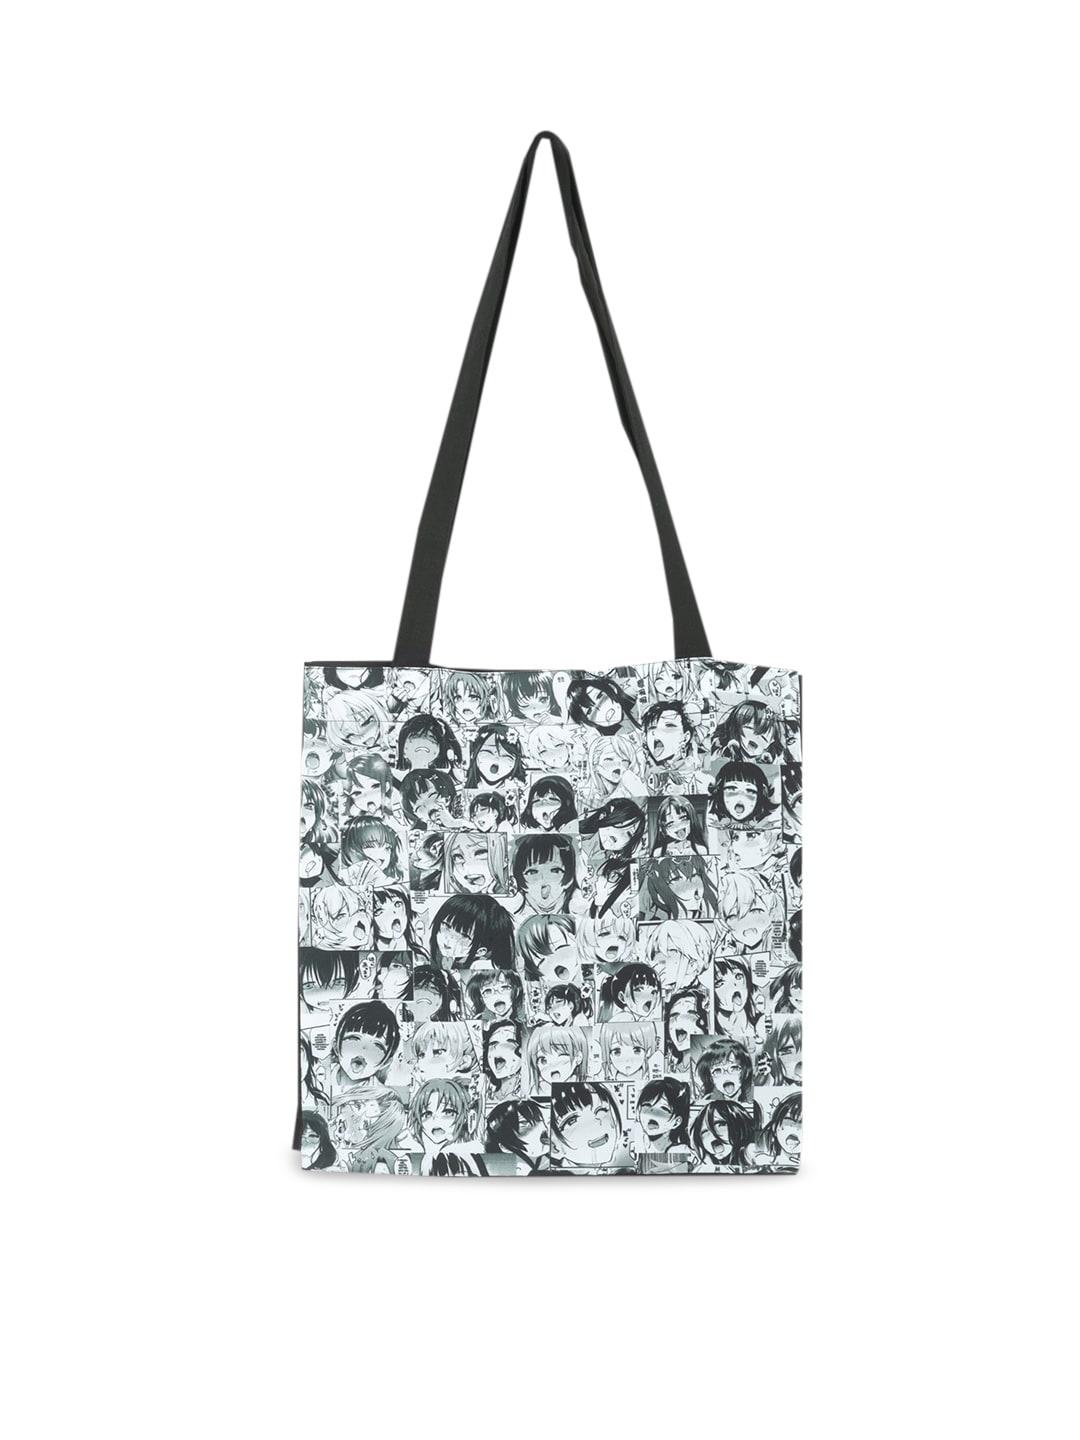 COMICSENSE Ahegao Printed Shopper Tote Bag